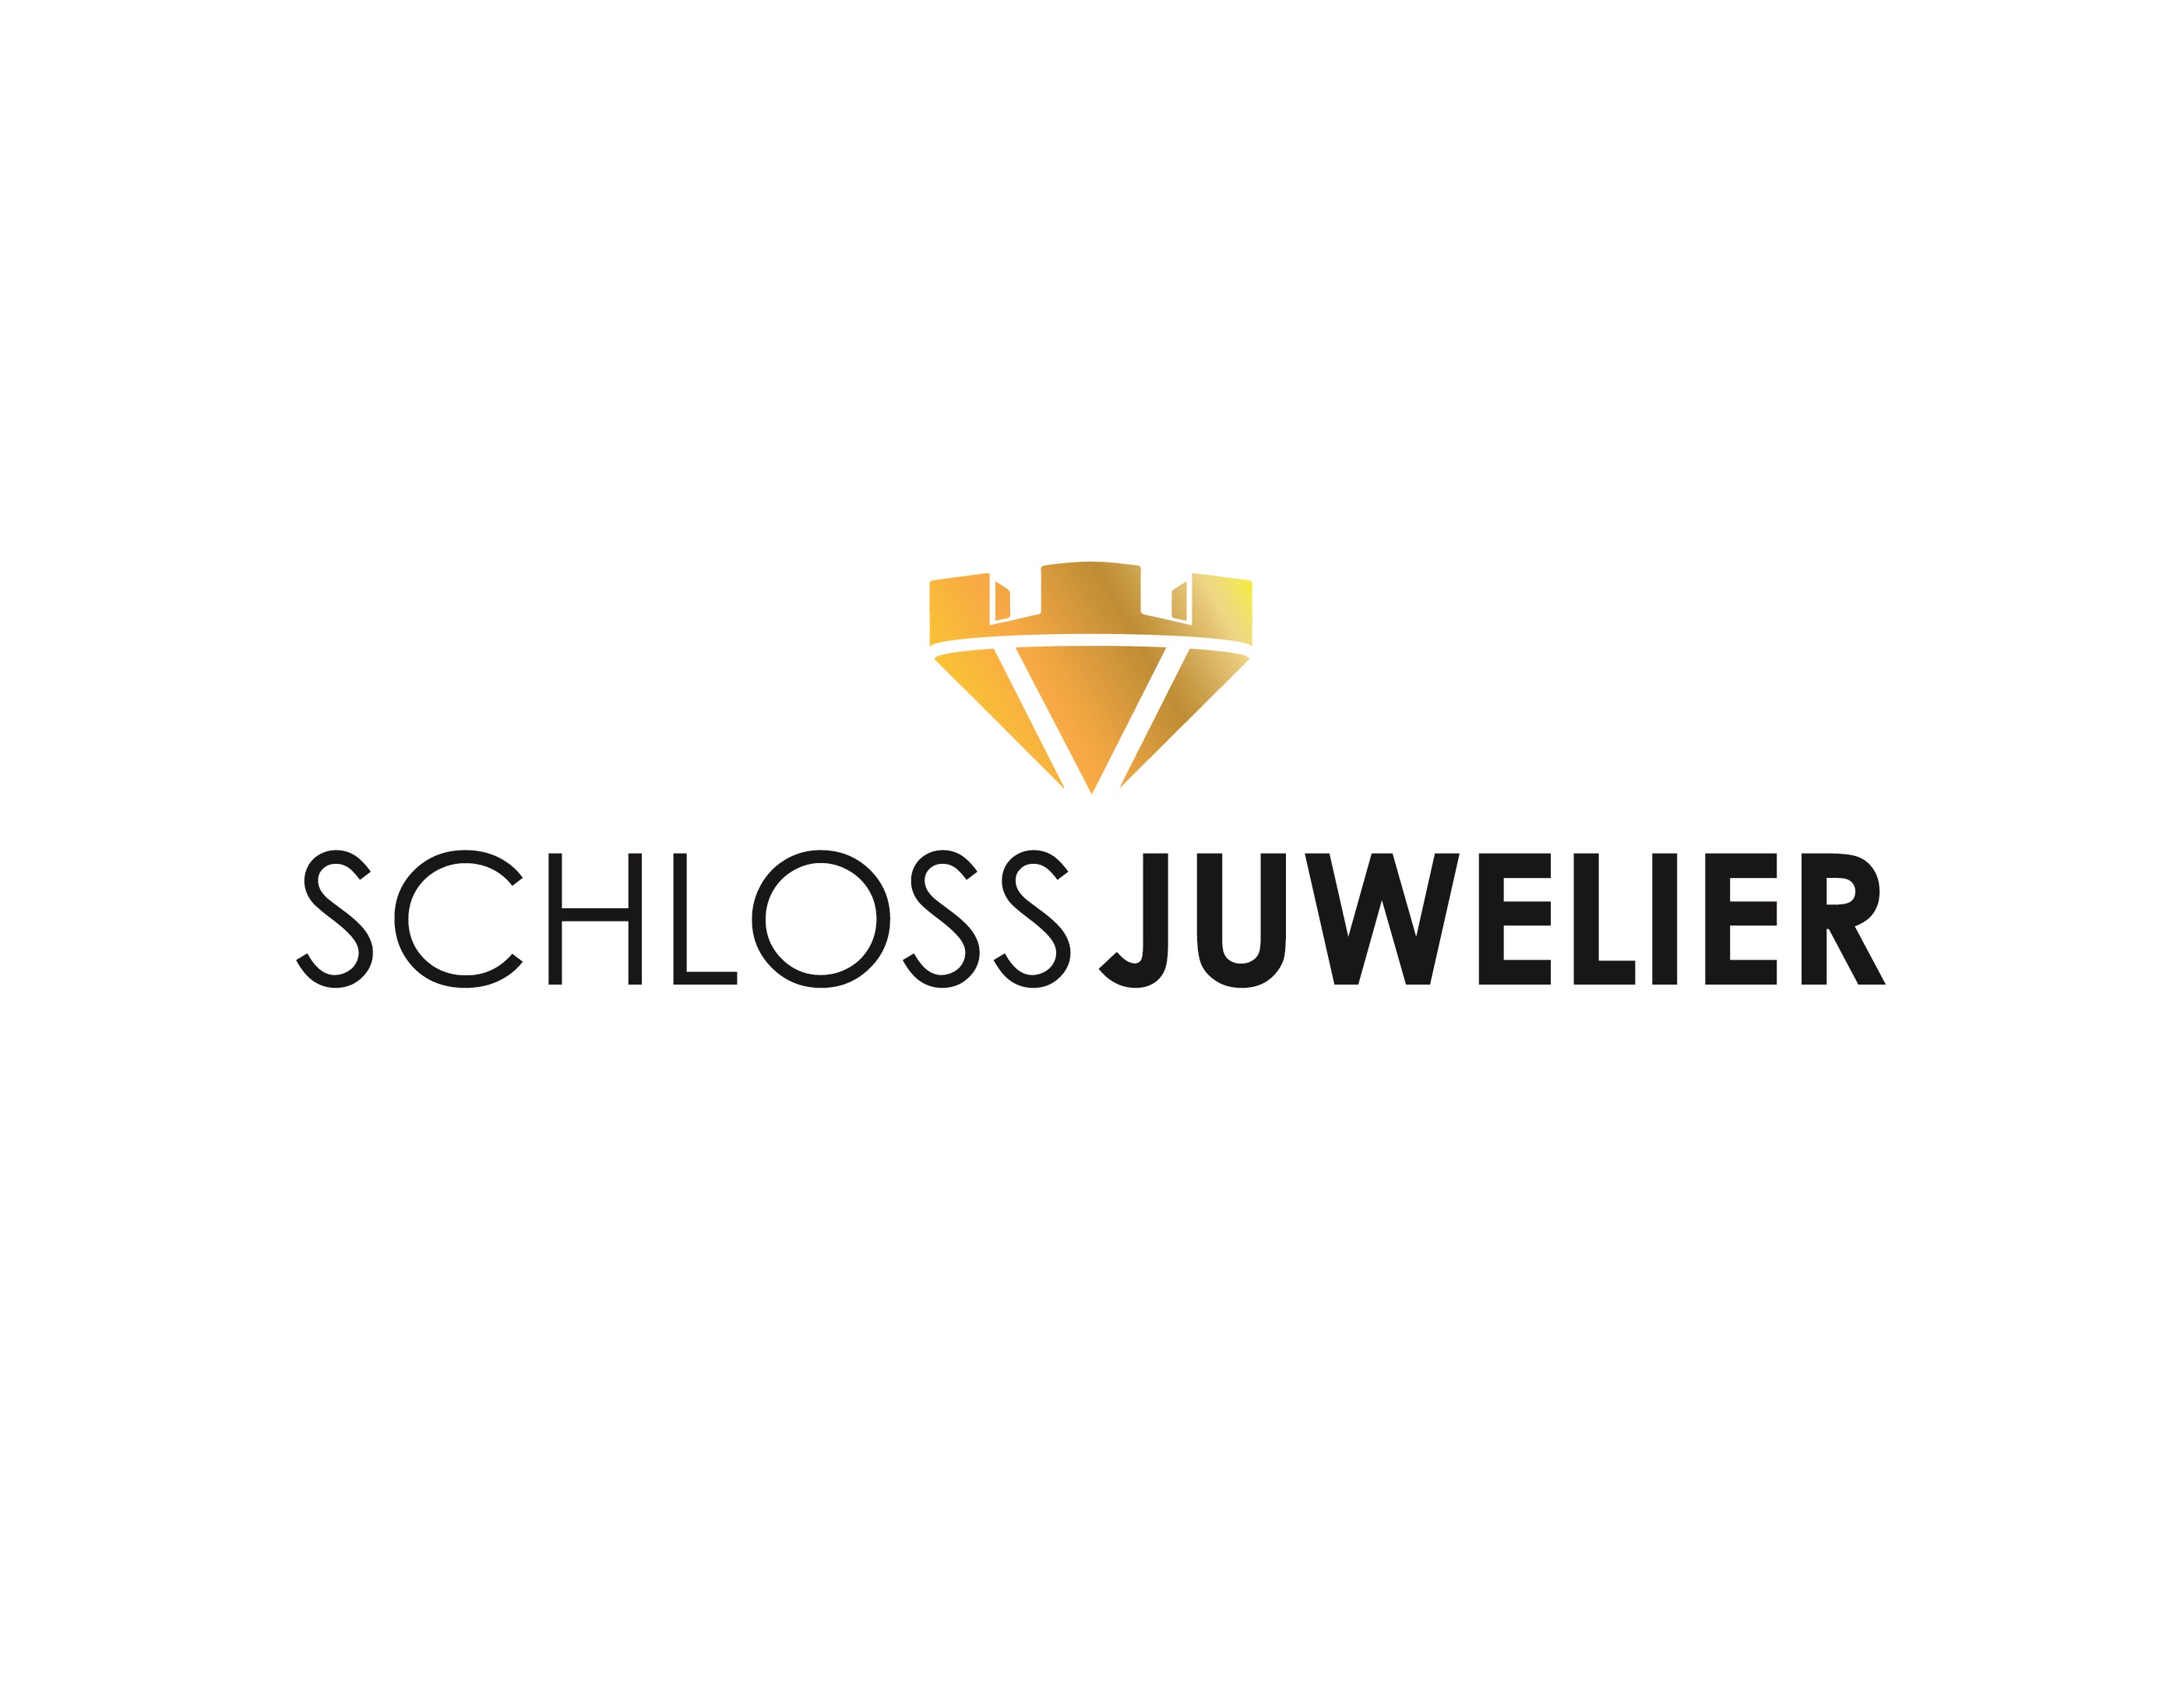 SCHLOSS JUWELIER - Trauringe, Antragsringe, Partnerringe, Gold - Platin - Silber - Goldankauf - Uhrenservice - Reperaturservice...